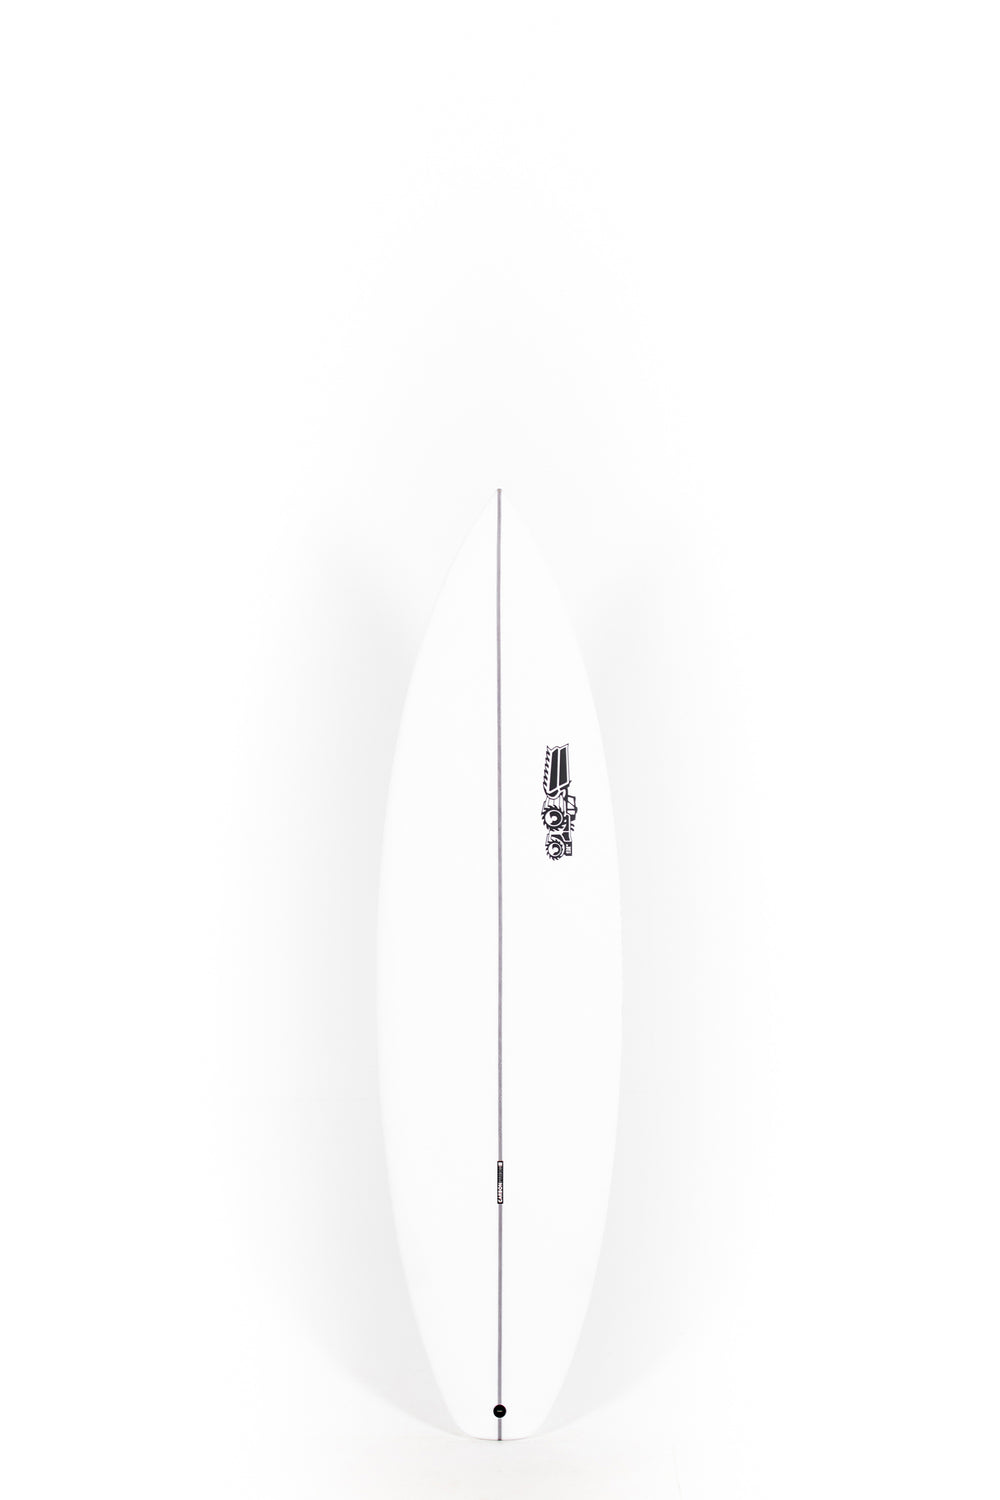 Pukas Surf Shop - JS Surfboards - MONSTA 2020 - 6'0